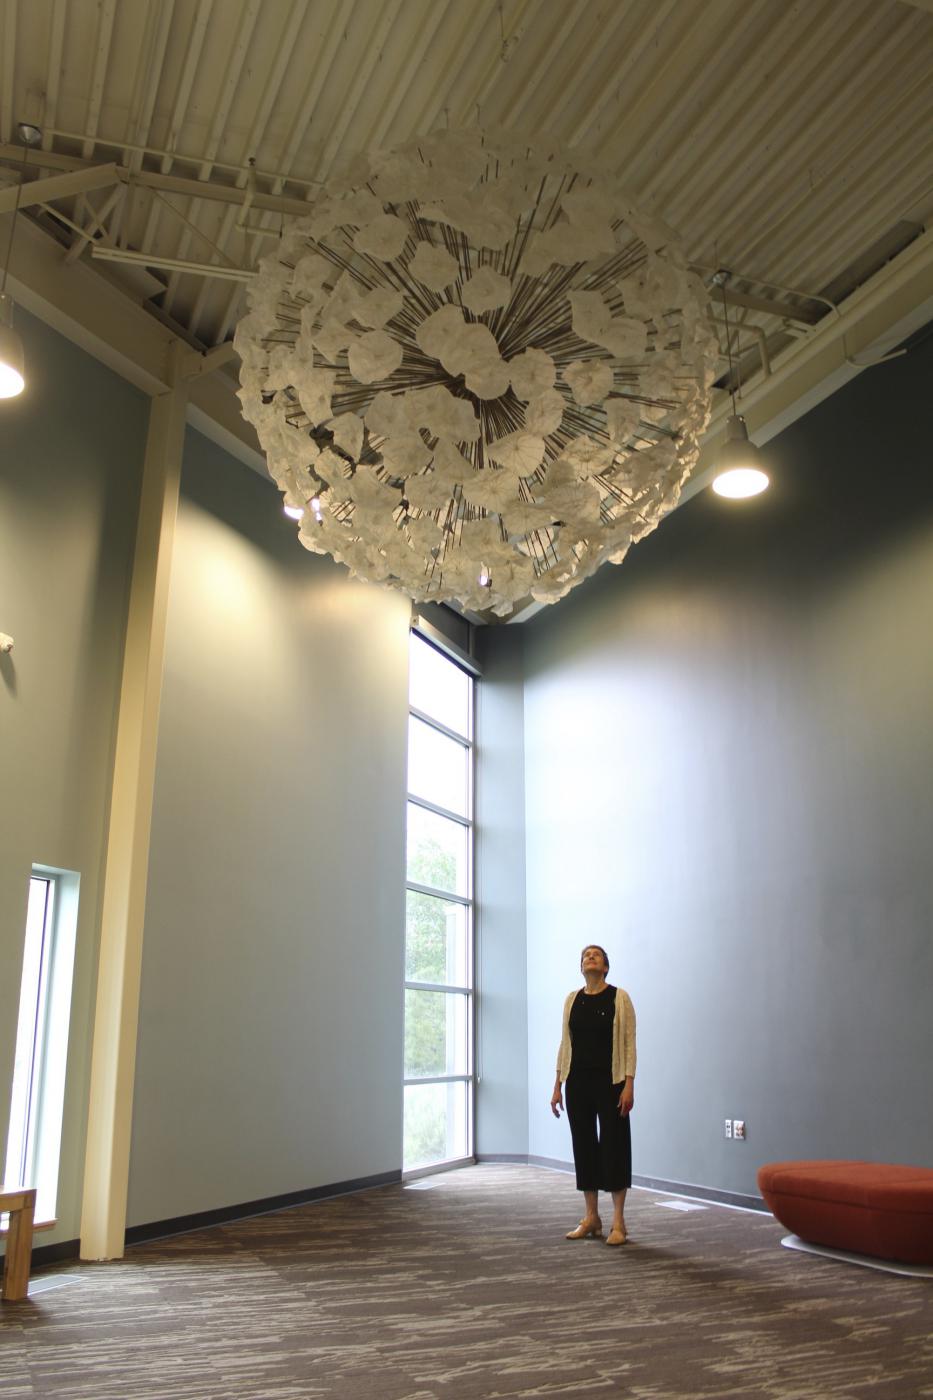 The Wish - a giant dandelion sculpture